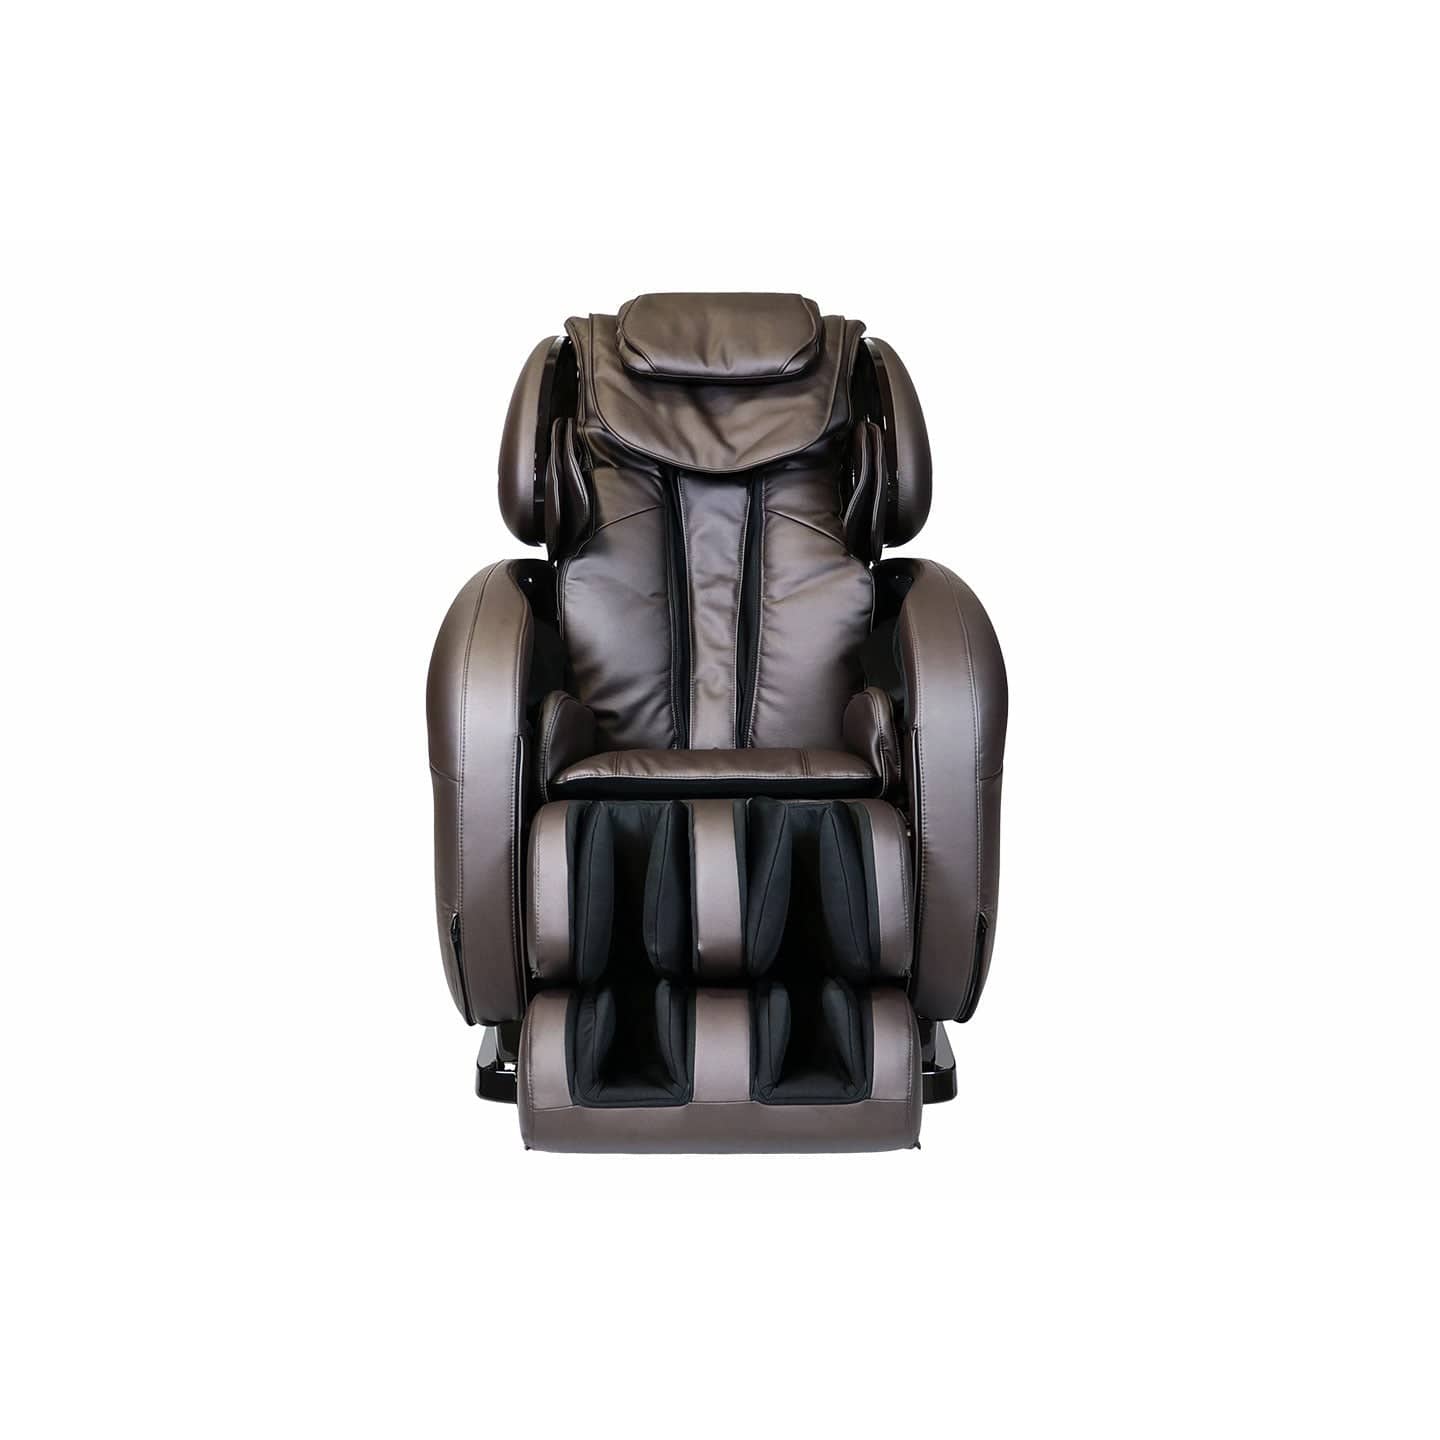 Infinity Massage Chairs Infinity Smart Chair X3 3D/4D Massage Chair